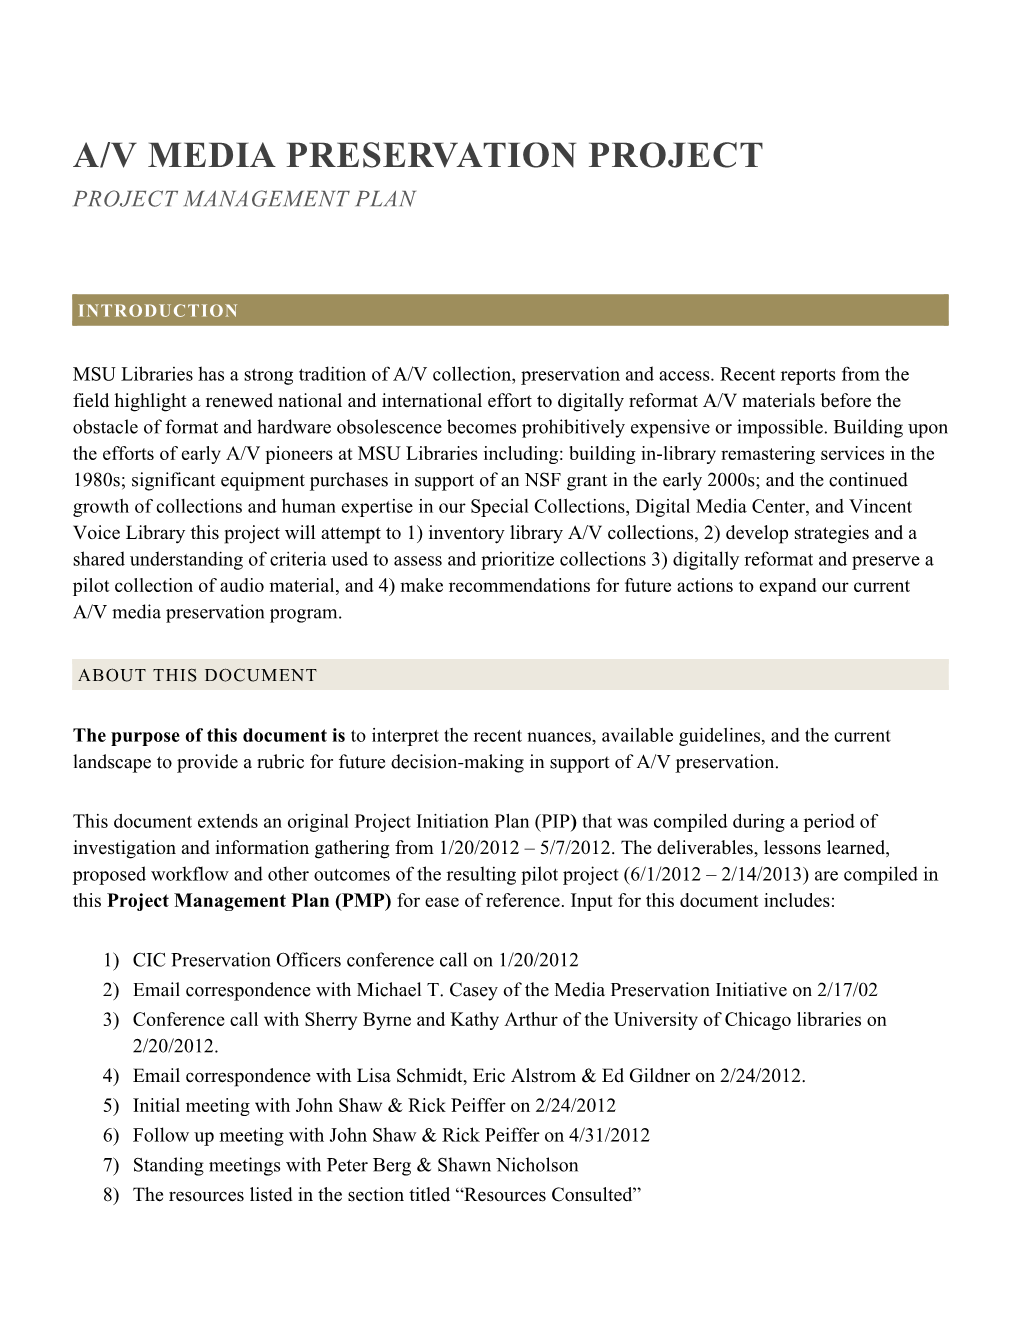 A/V Media Preservation Project